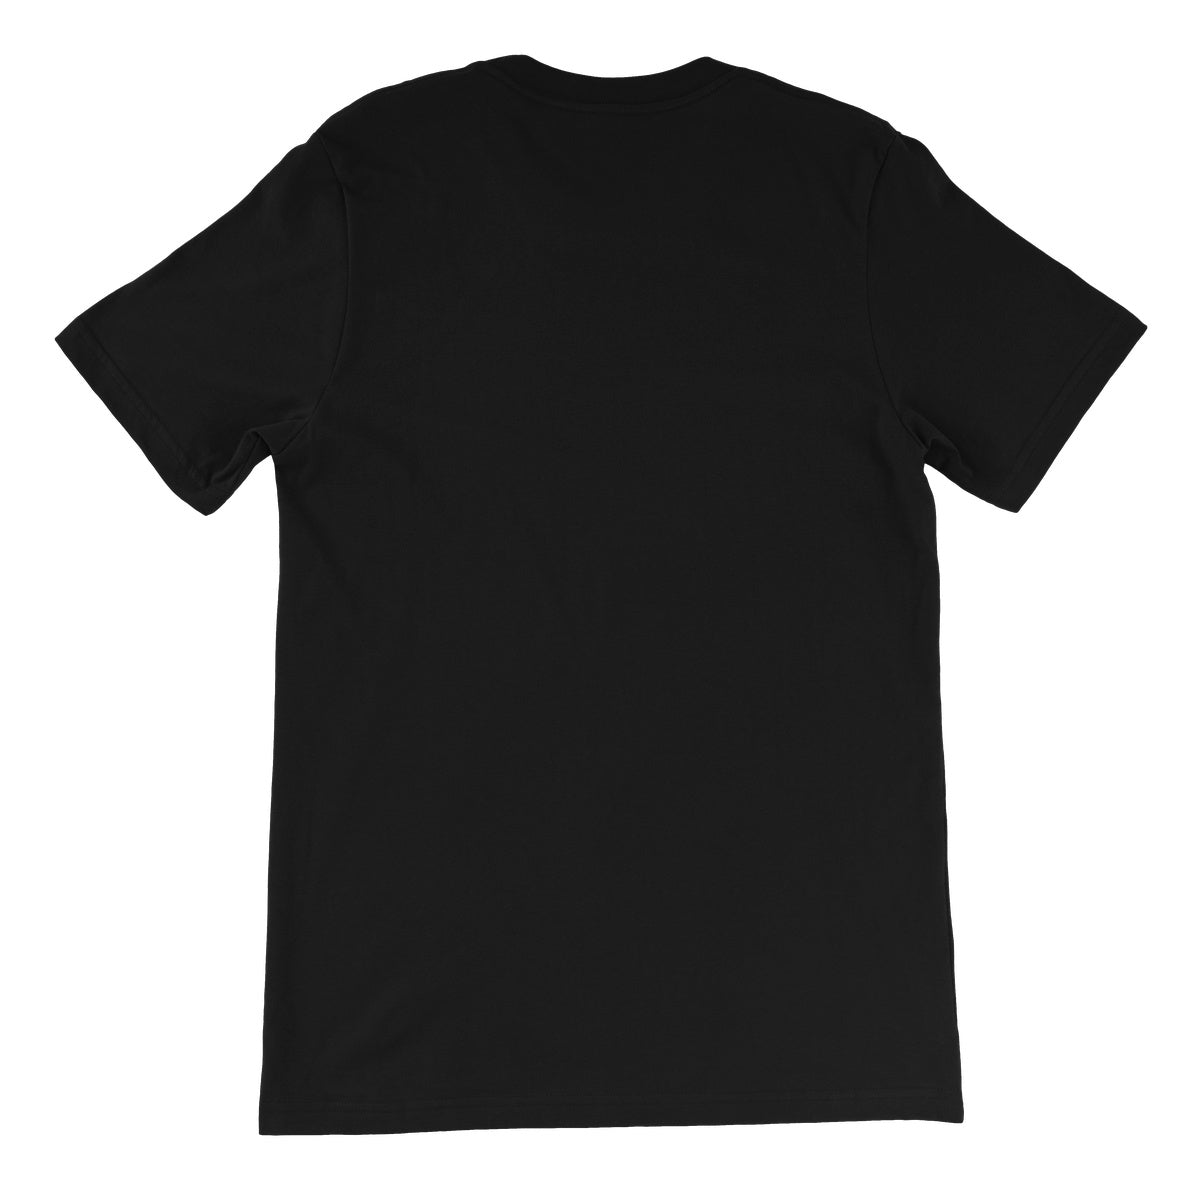 Talk'n SHOP Beercan Logo Unisex Short Sleeve T-Shirt